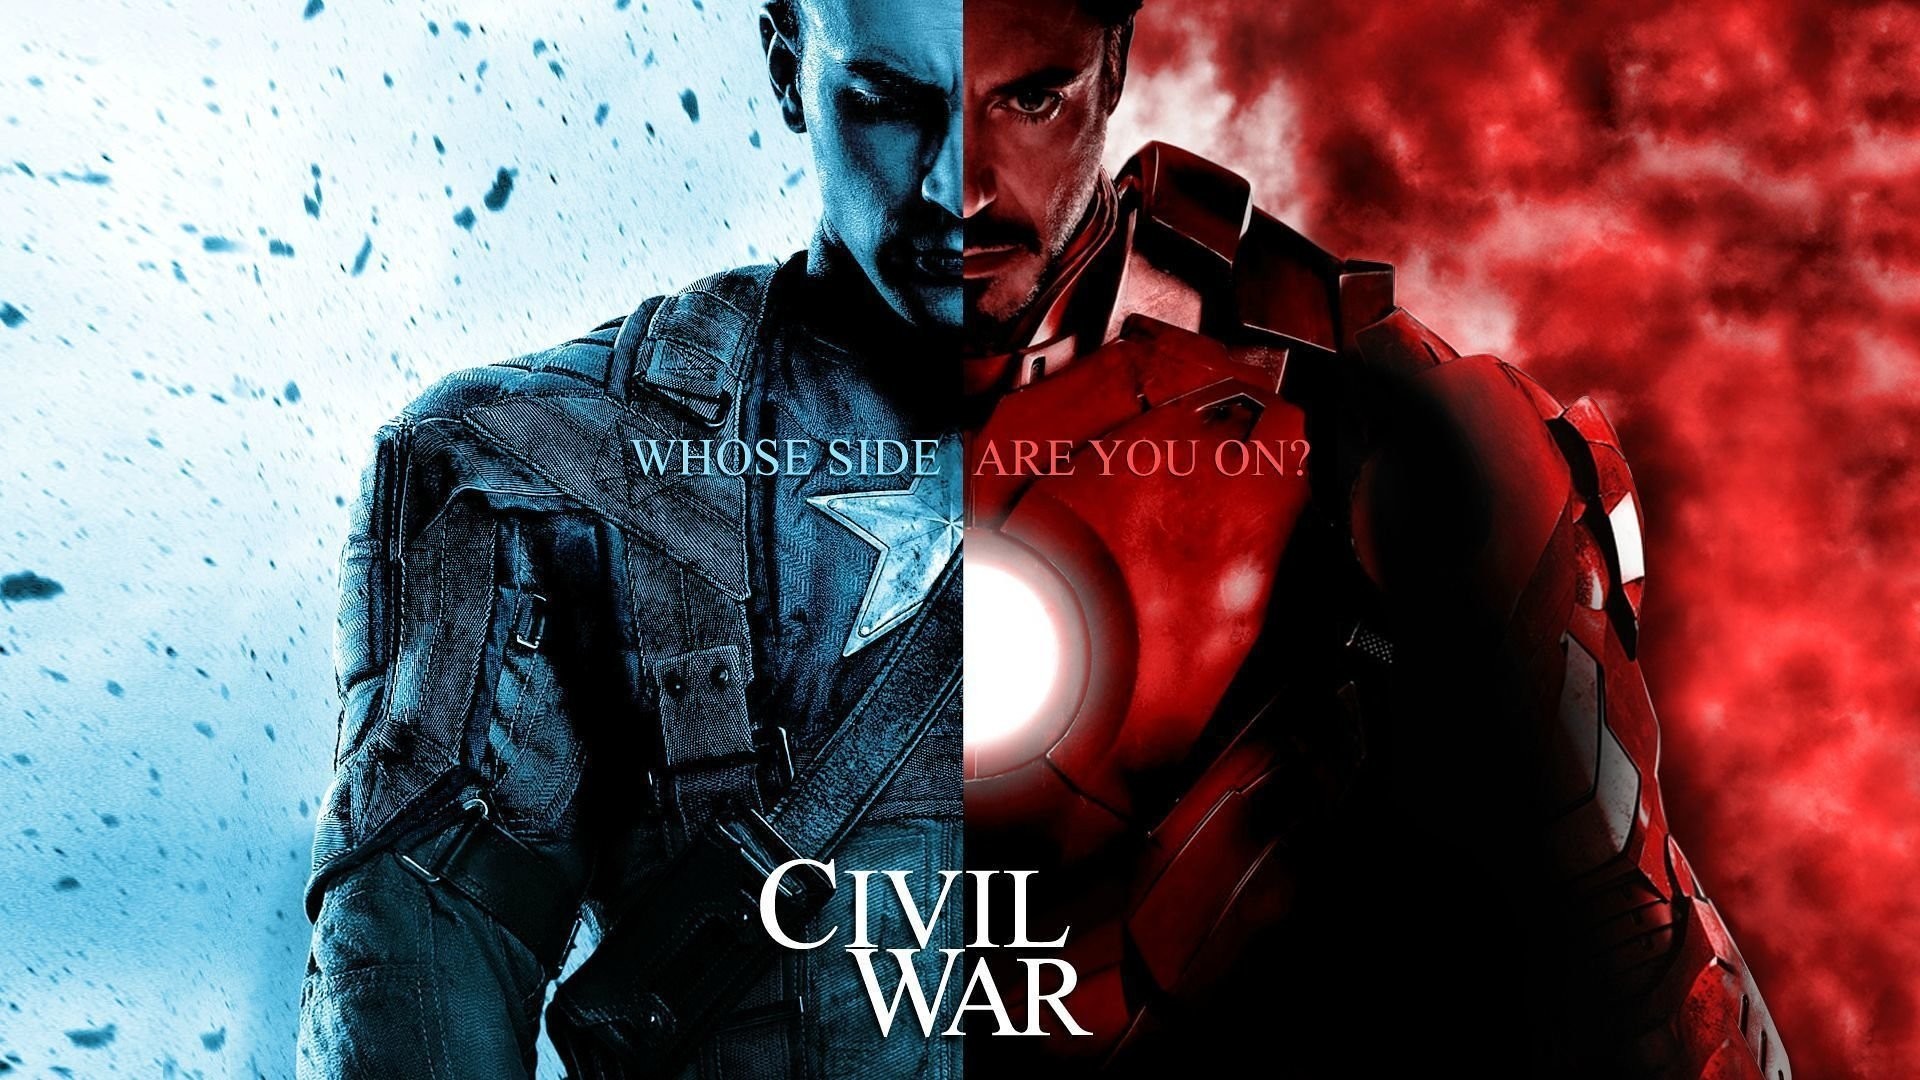 1920x1080 Captain America Civil War Wallpapers HD | HD Wallpapers | Pinterest |  Marvel civil war, Hd wallpaper and Wallpaper